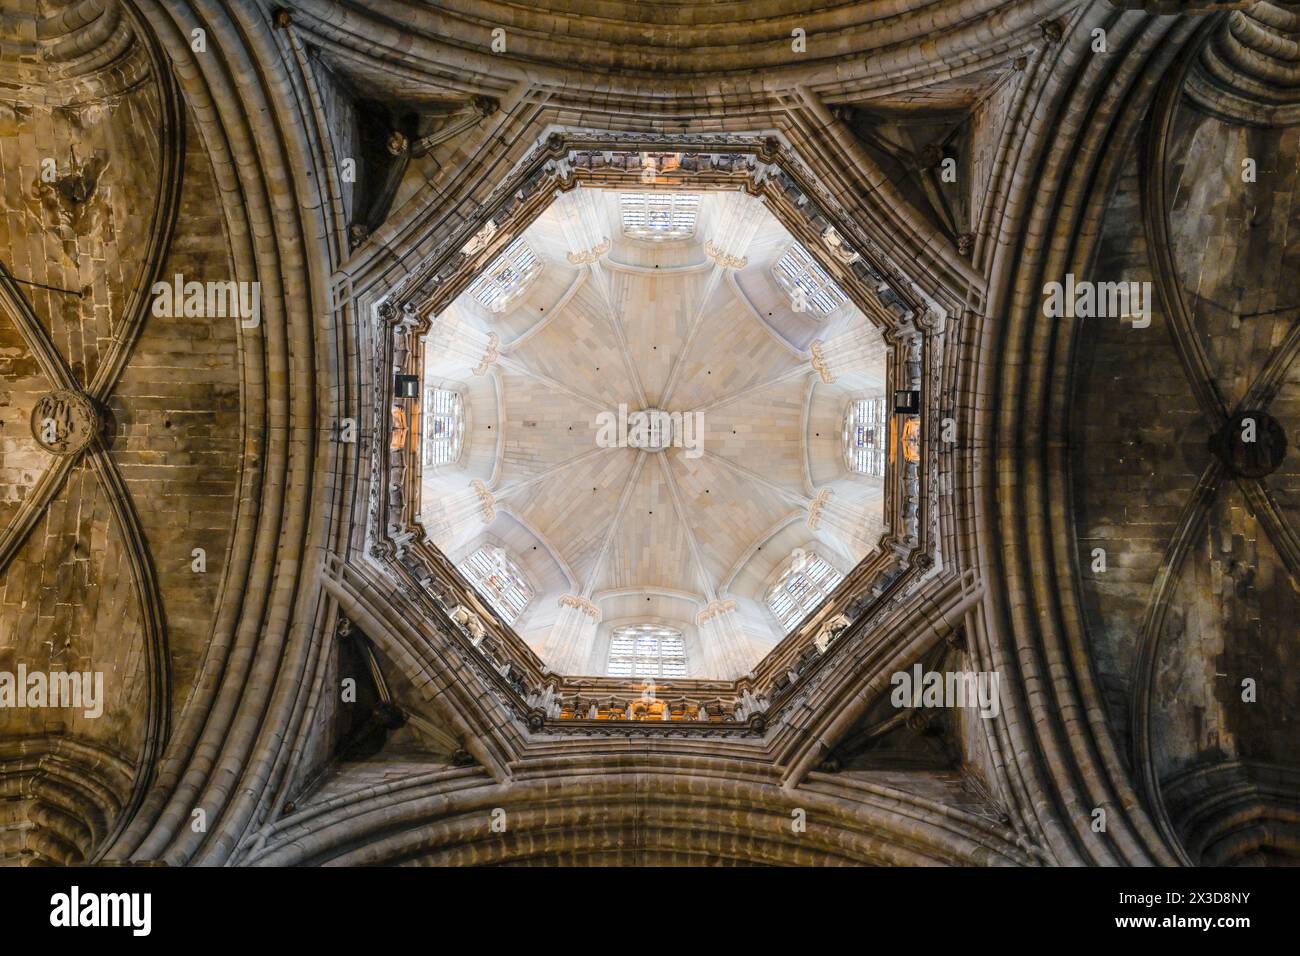 Deckengewölbe im Hauptchor, Kathedrale, Catedral de la Santa Creu i Santa Eulalia, Barcelona, Katalonien, Spanien Banque D'Images